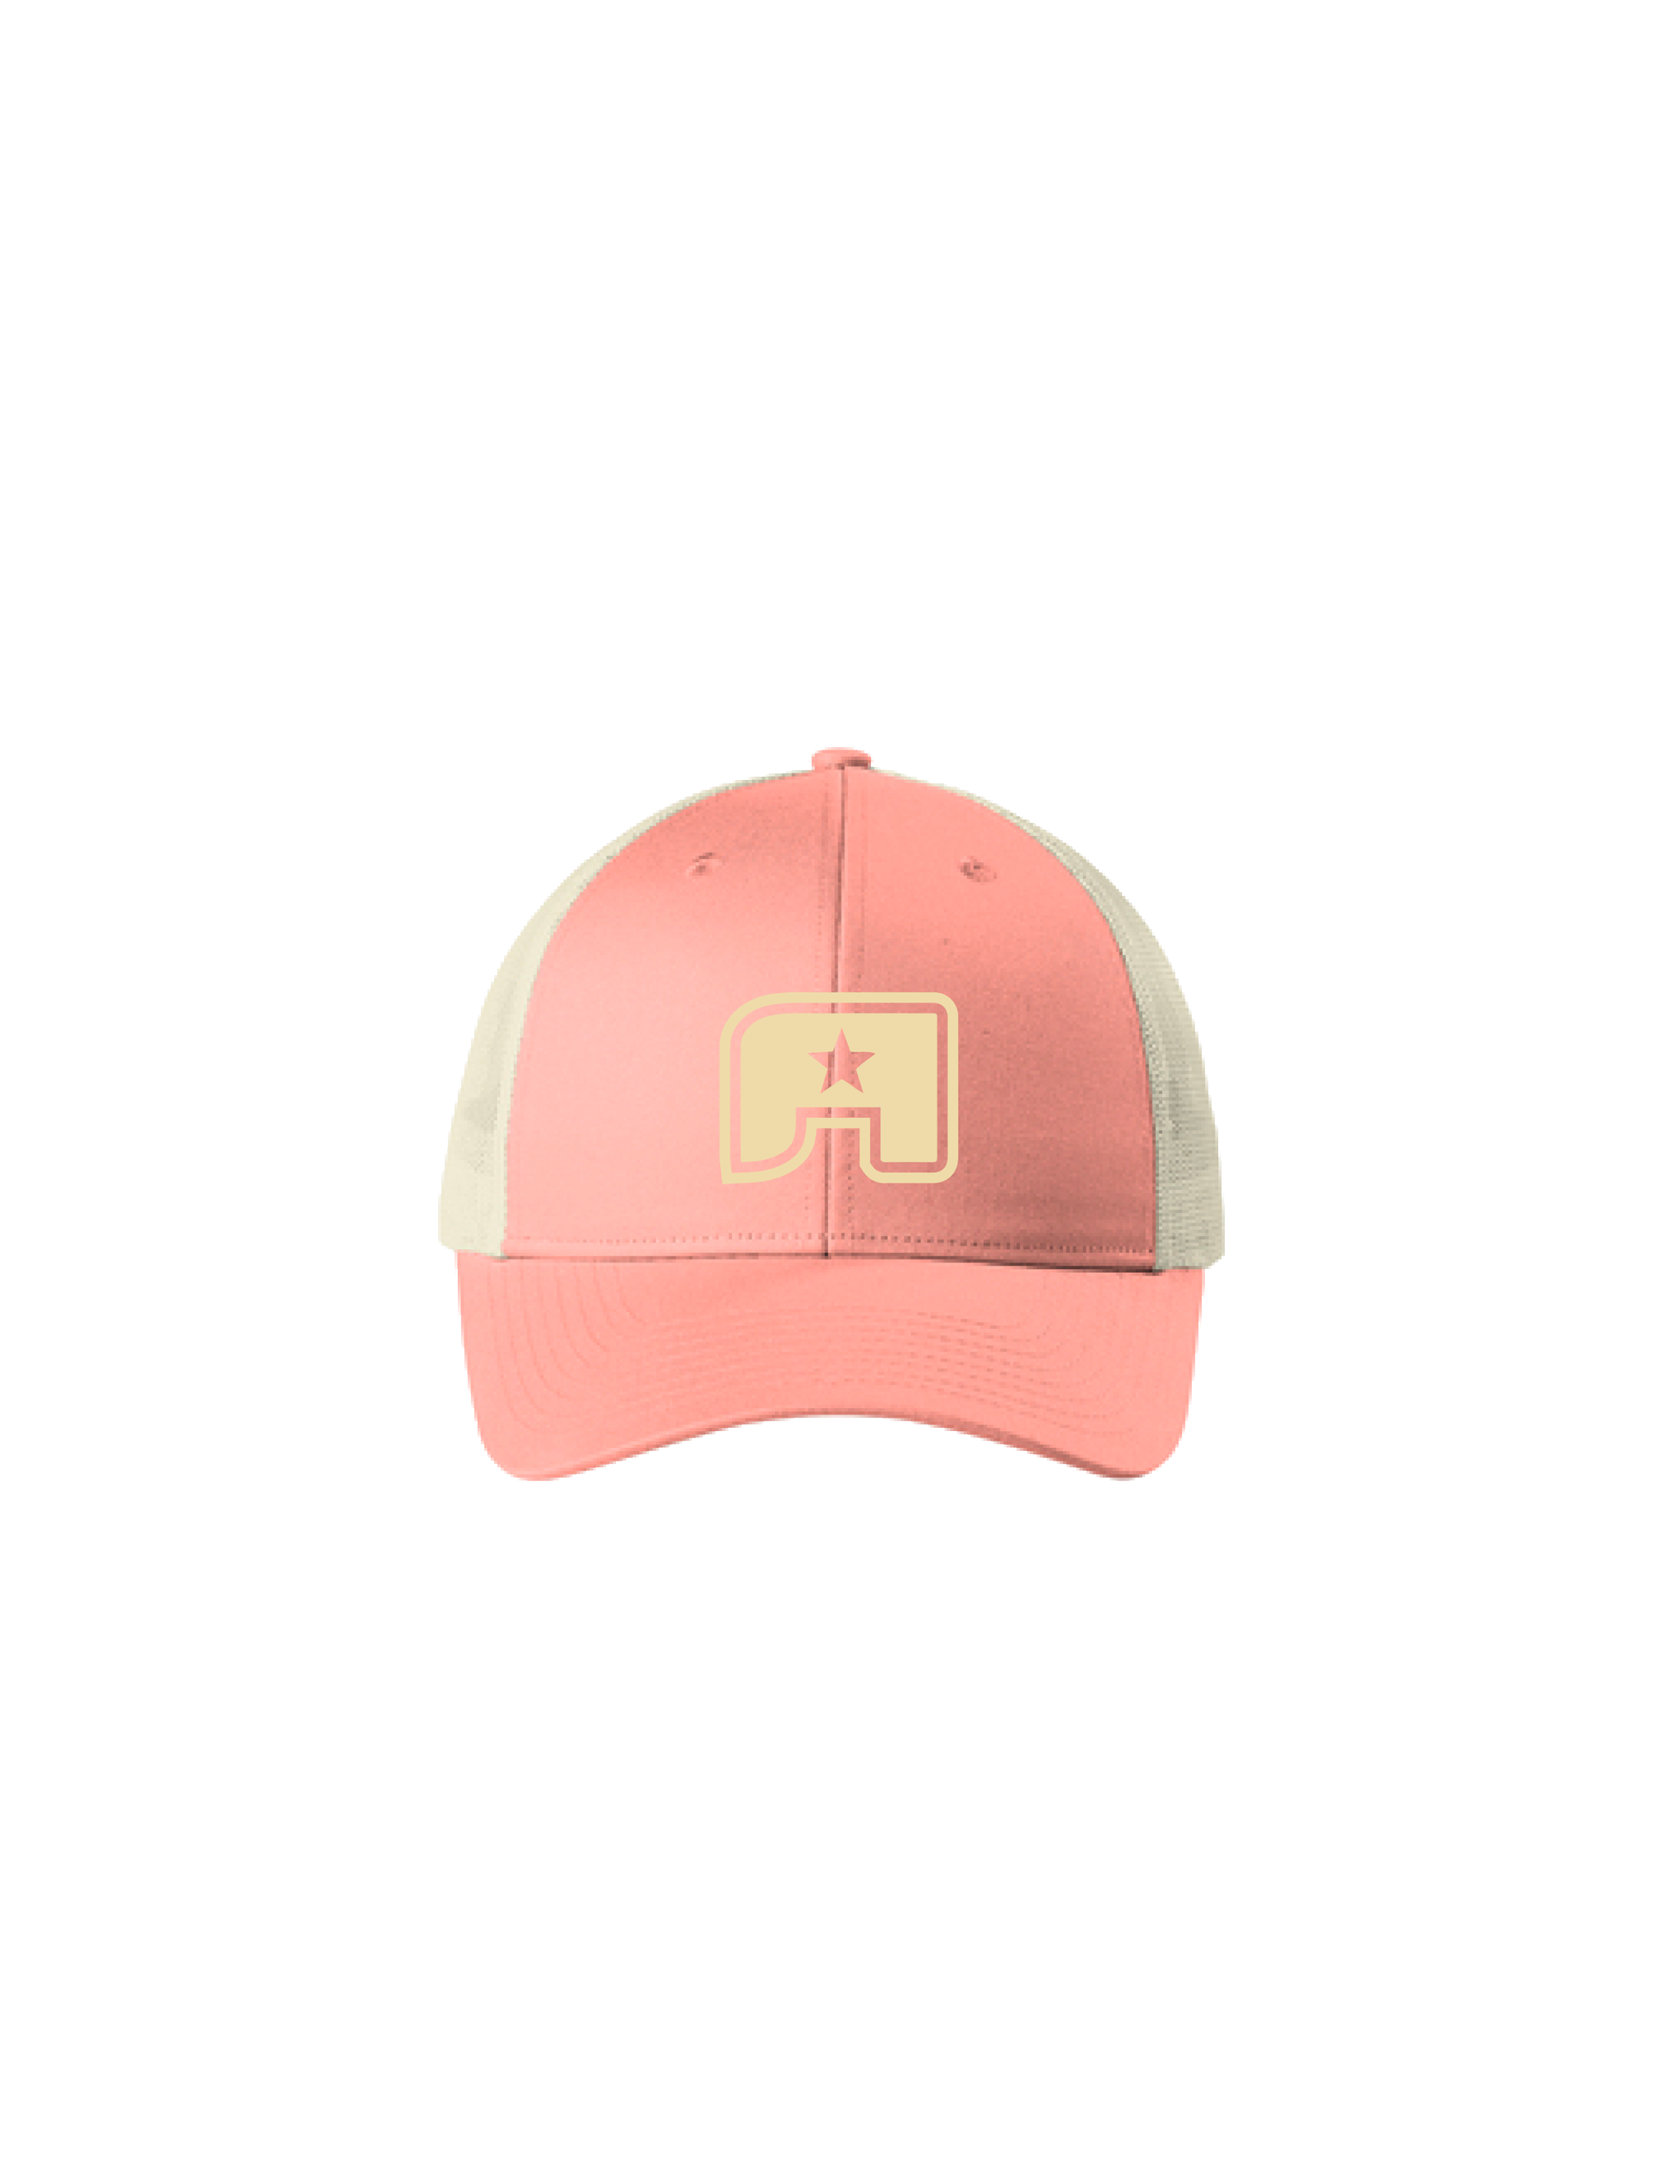 Atlanta Sport & Social Club Trucker - Pink/Tan